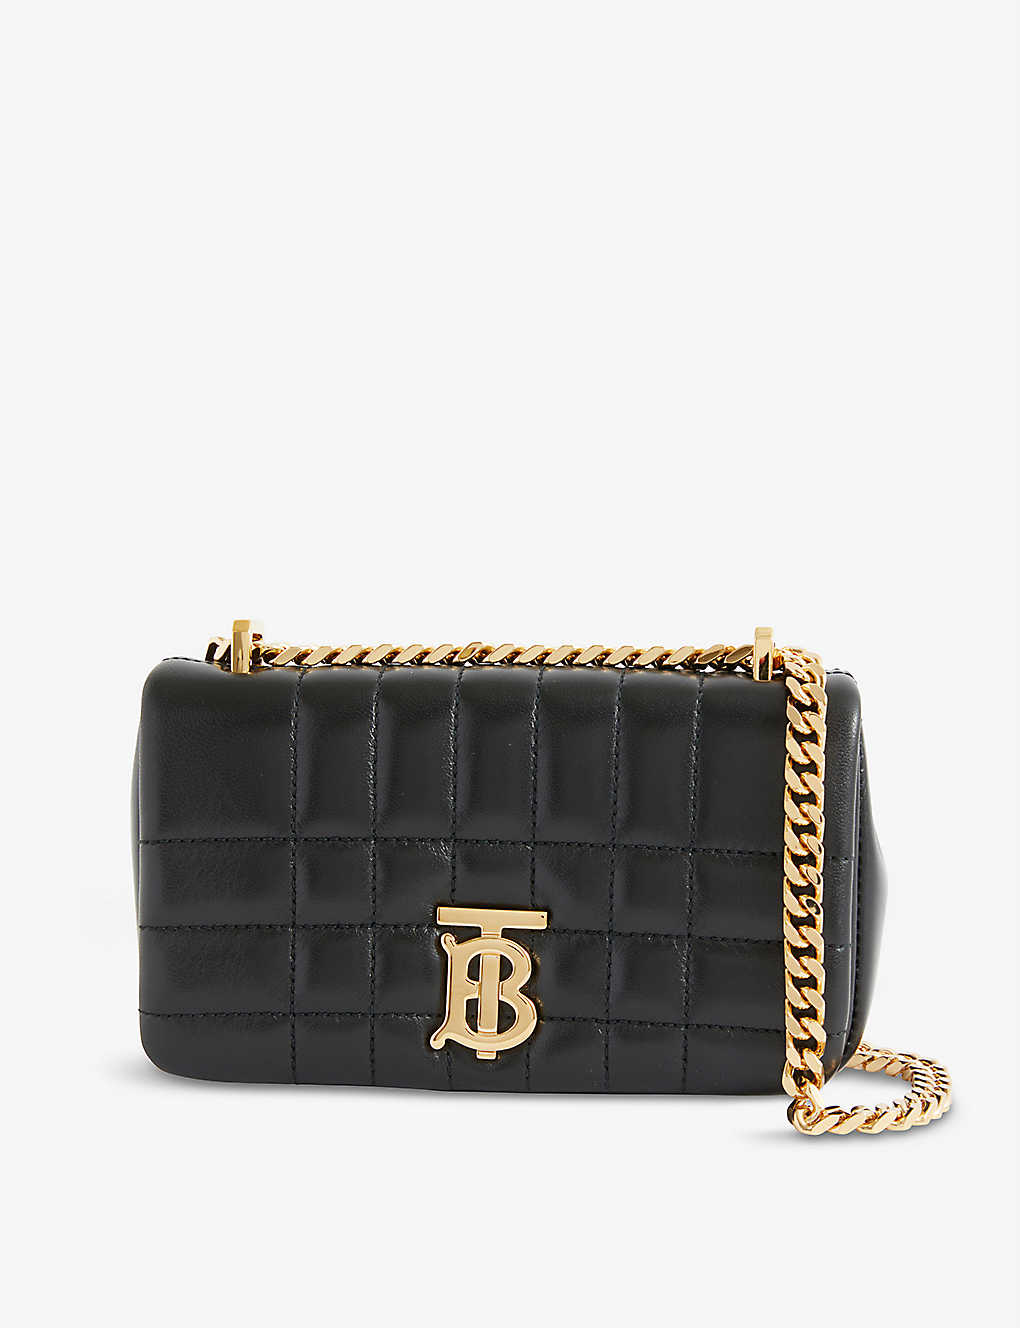 Burberry Lola Brand-plaque Leather Leather Shoulder Bag In Black/gold